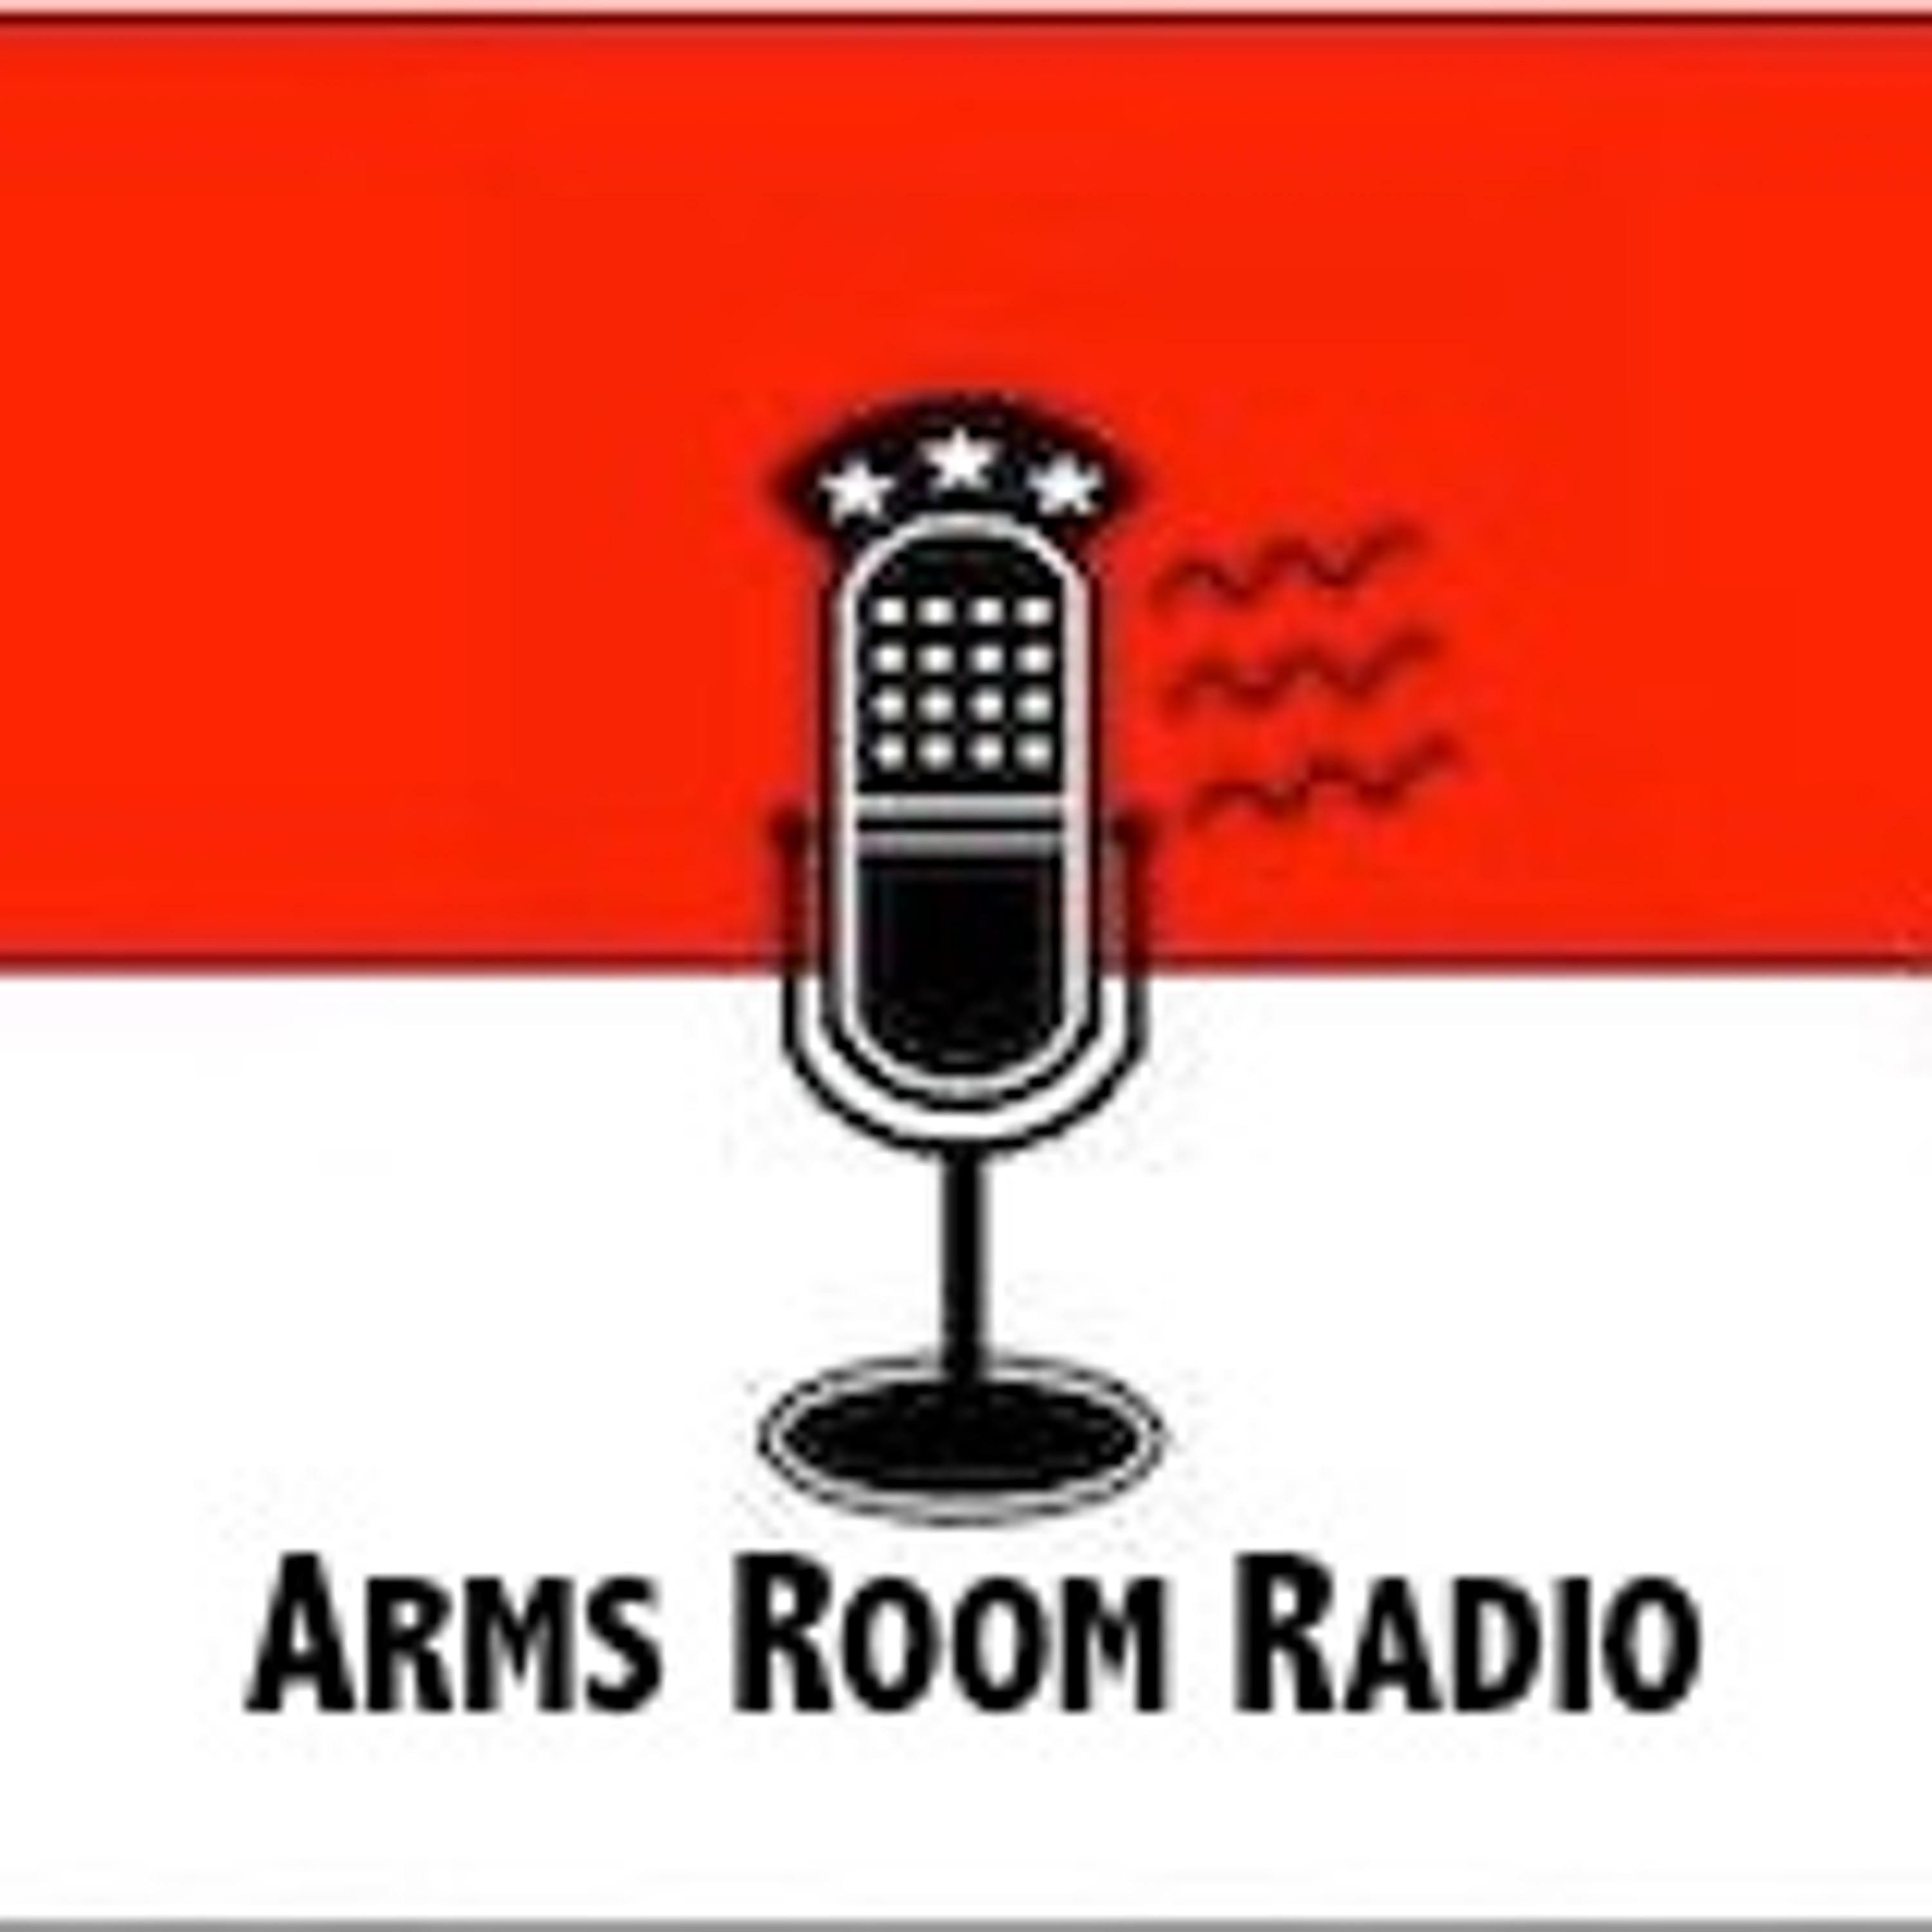 ArmsRoomRadio 09.21.19 GRPC!